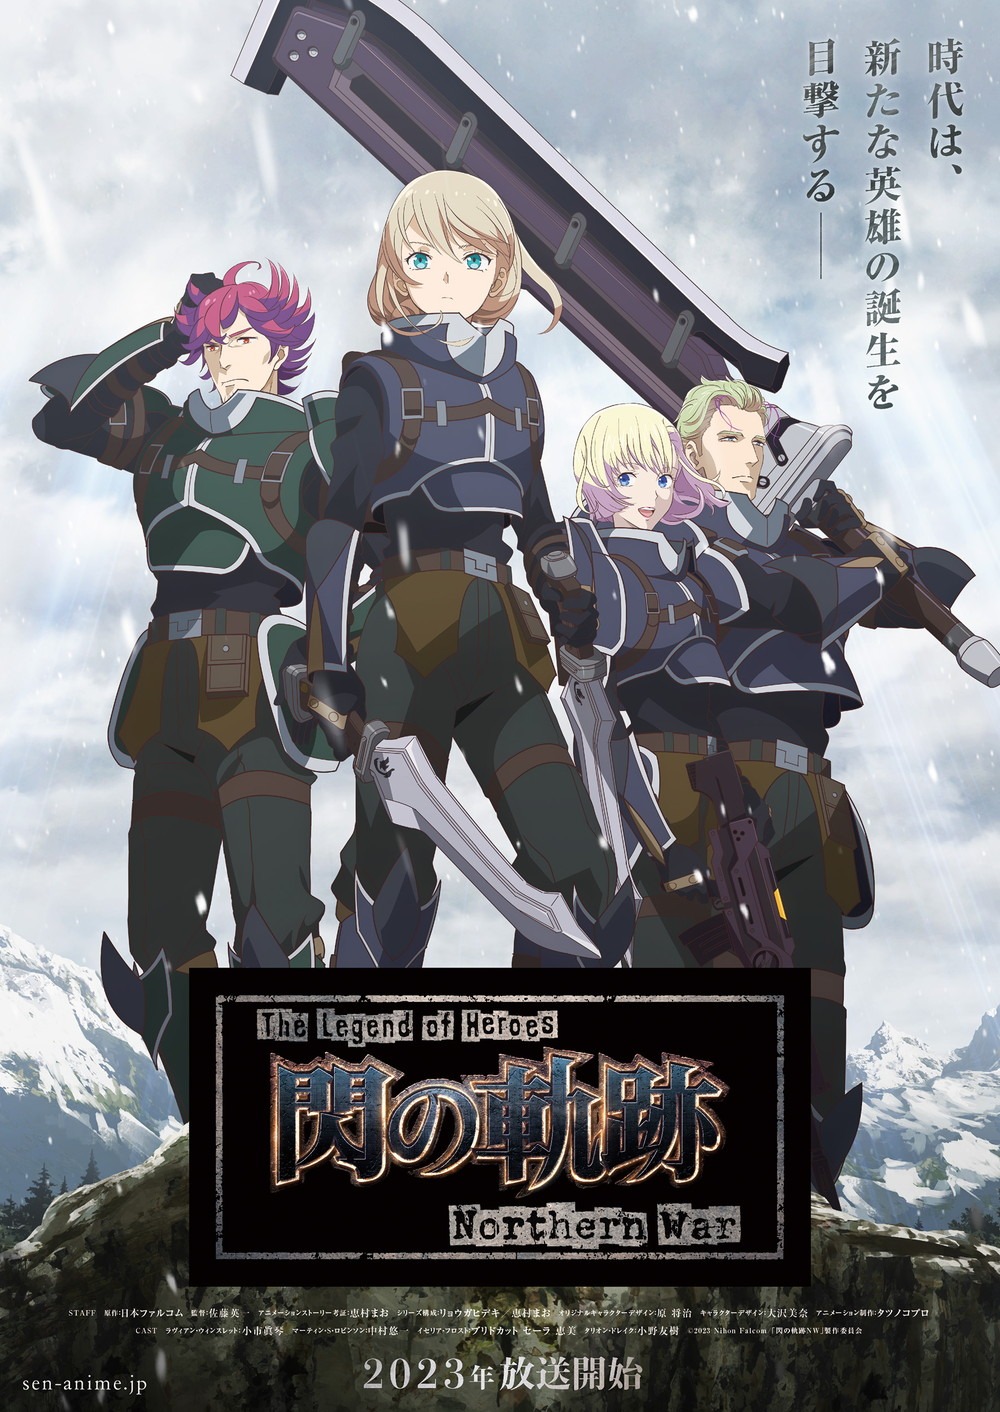 The Legend of Heroes: Trails of Cold Steel Northern War: Anime teve seu  primeiro trailer revelado